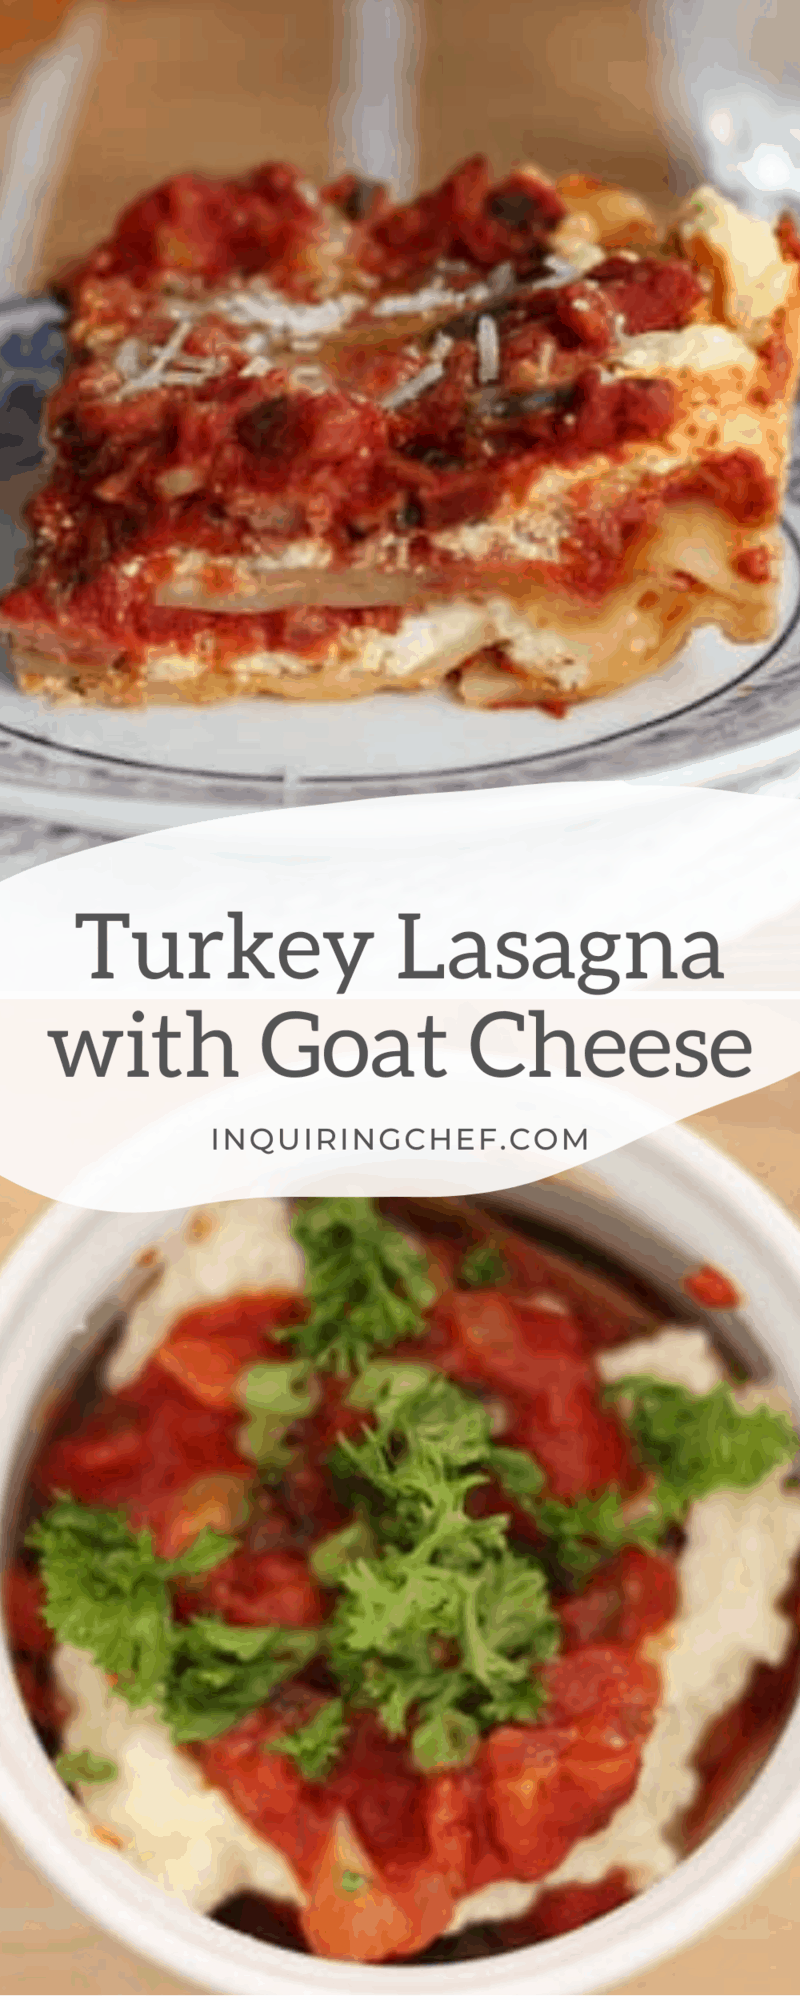 Ina Garten's Turkey Lasagna